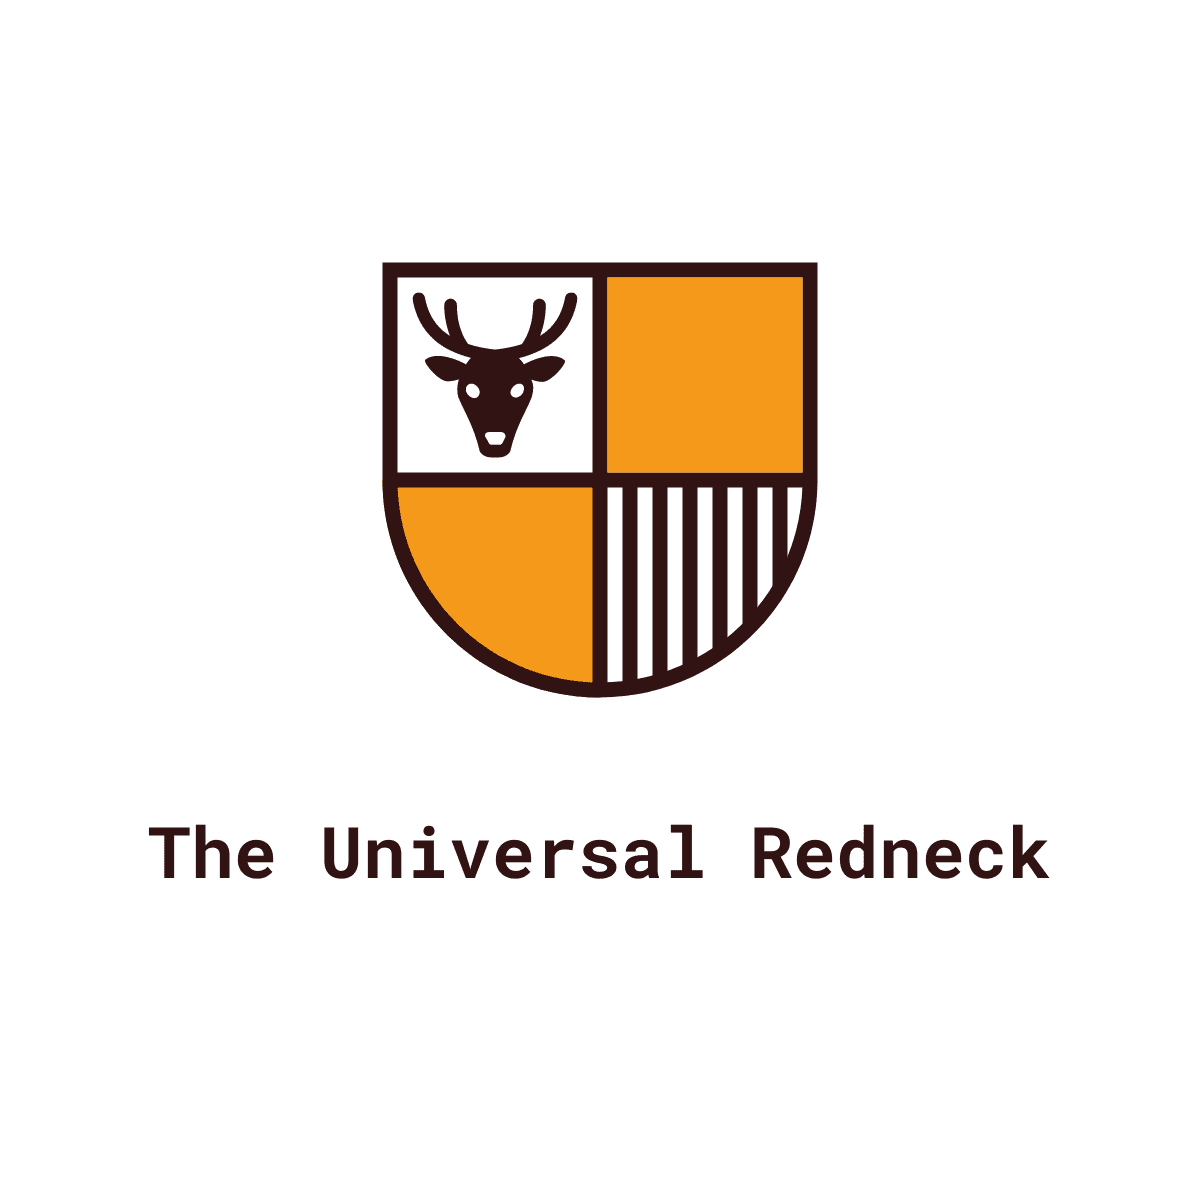 The Universal Redneck